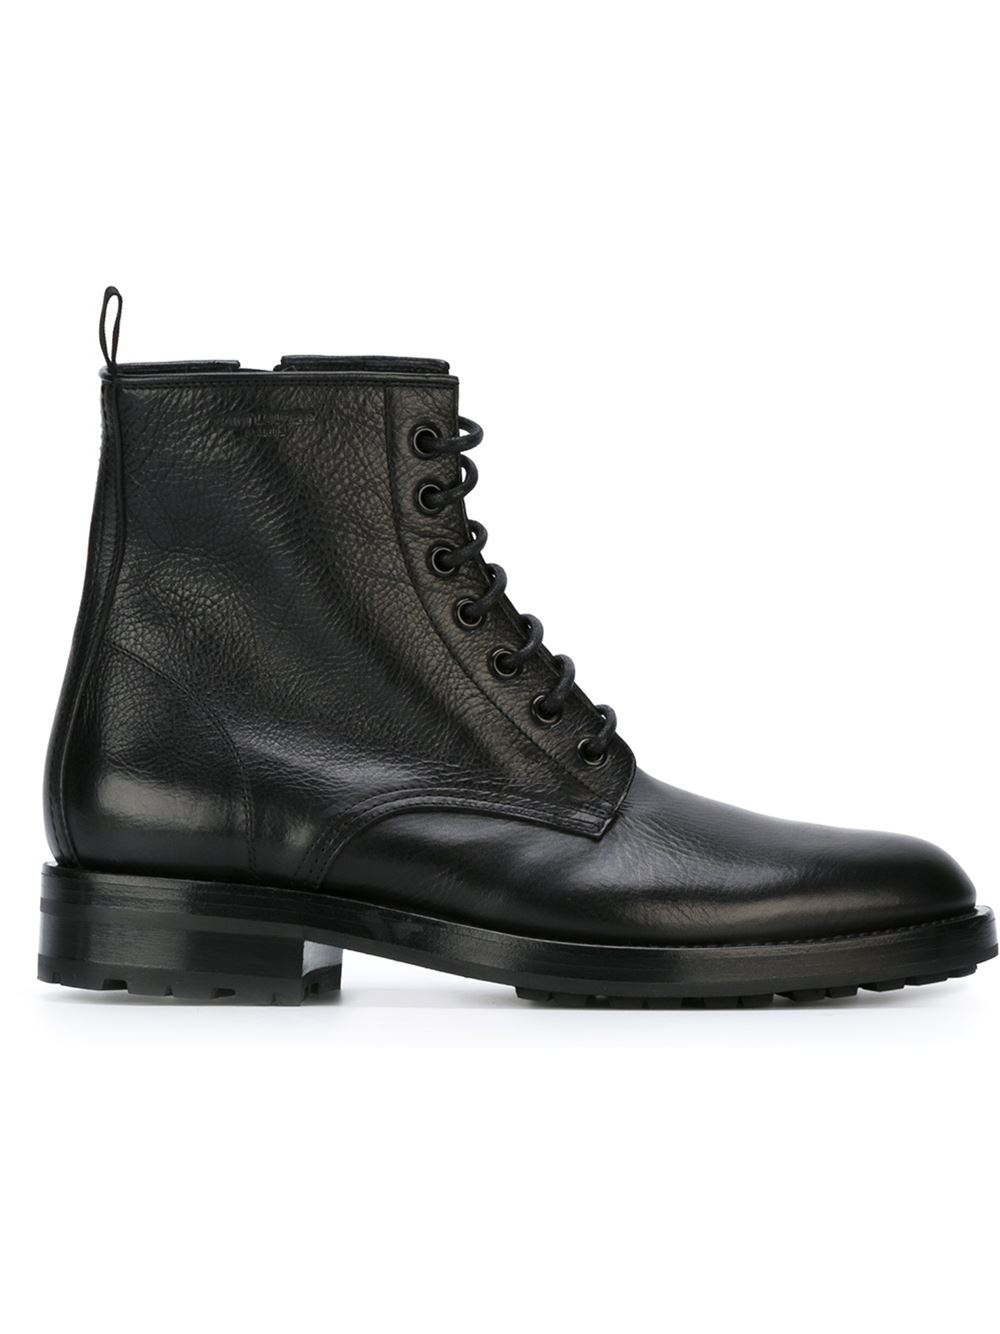 Saint laurent Classic Military Boots in Black for Men | Lyst